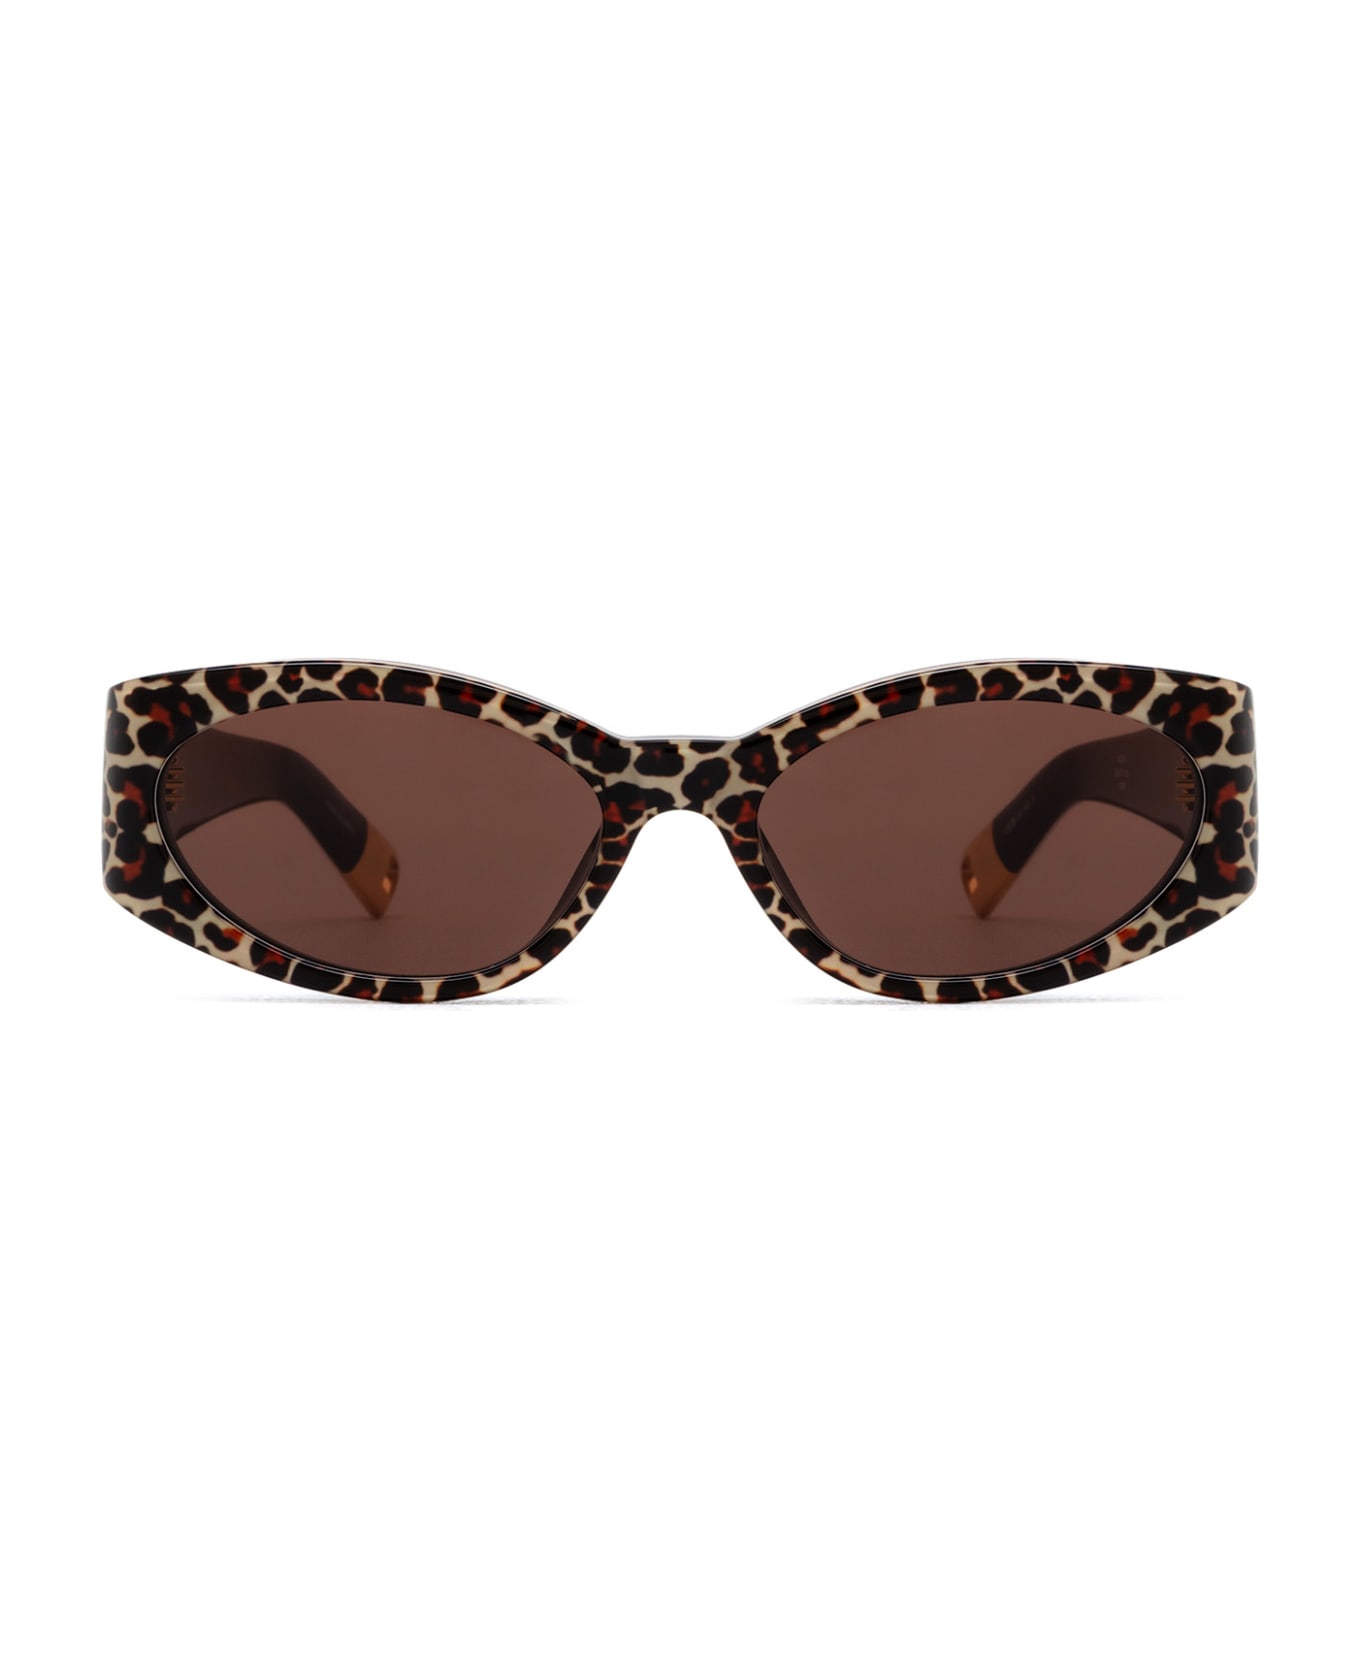 Jacquemus Jac4 Leopard Sunglasses - Leopard サングラス